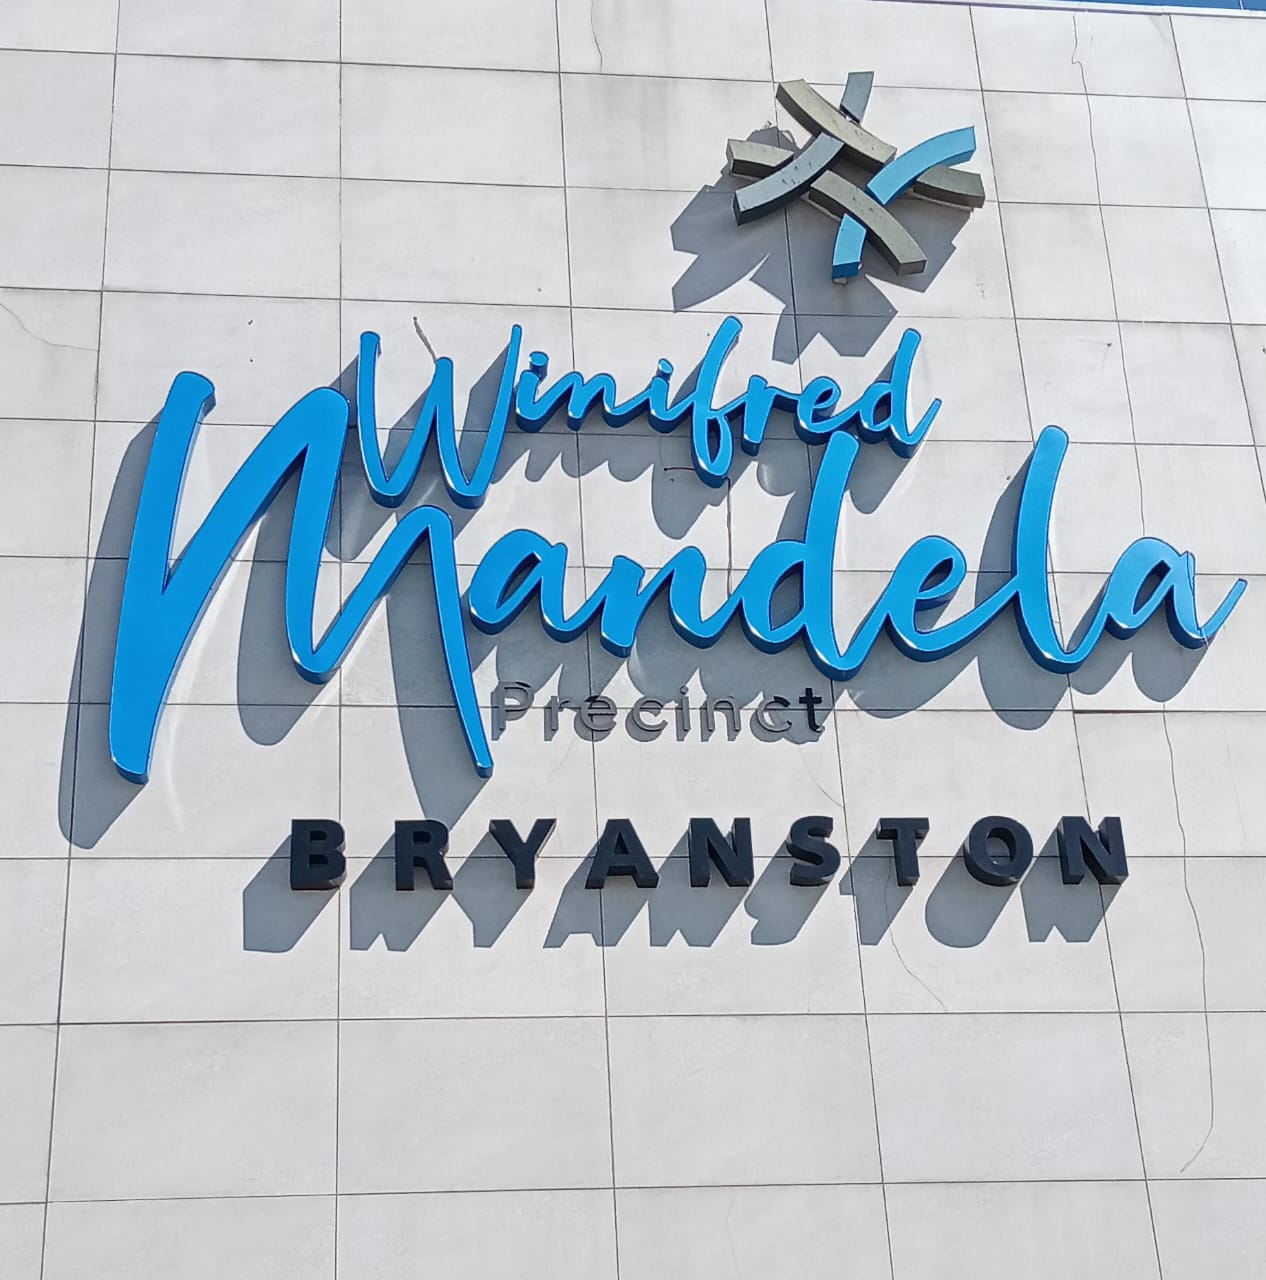 Transformation In Johannesburg: Nicolway Centre Becomes Winifred Mandela Precinct 7